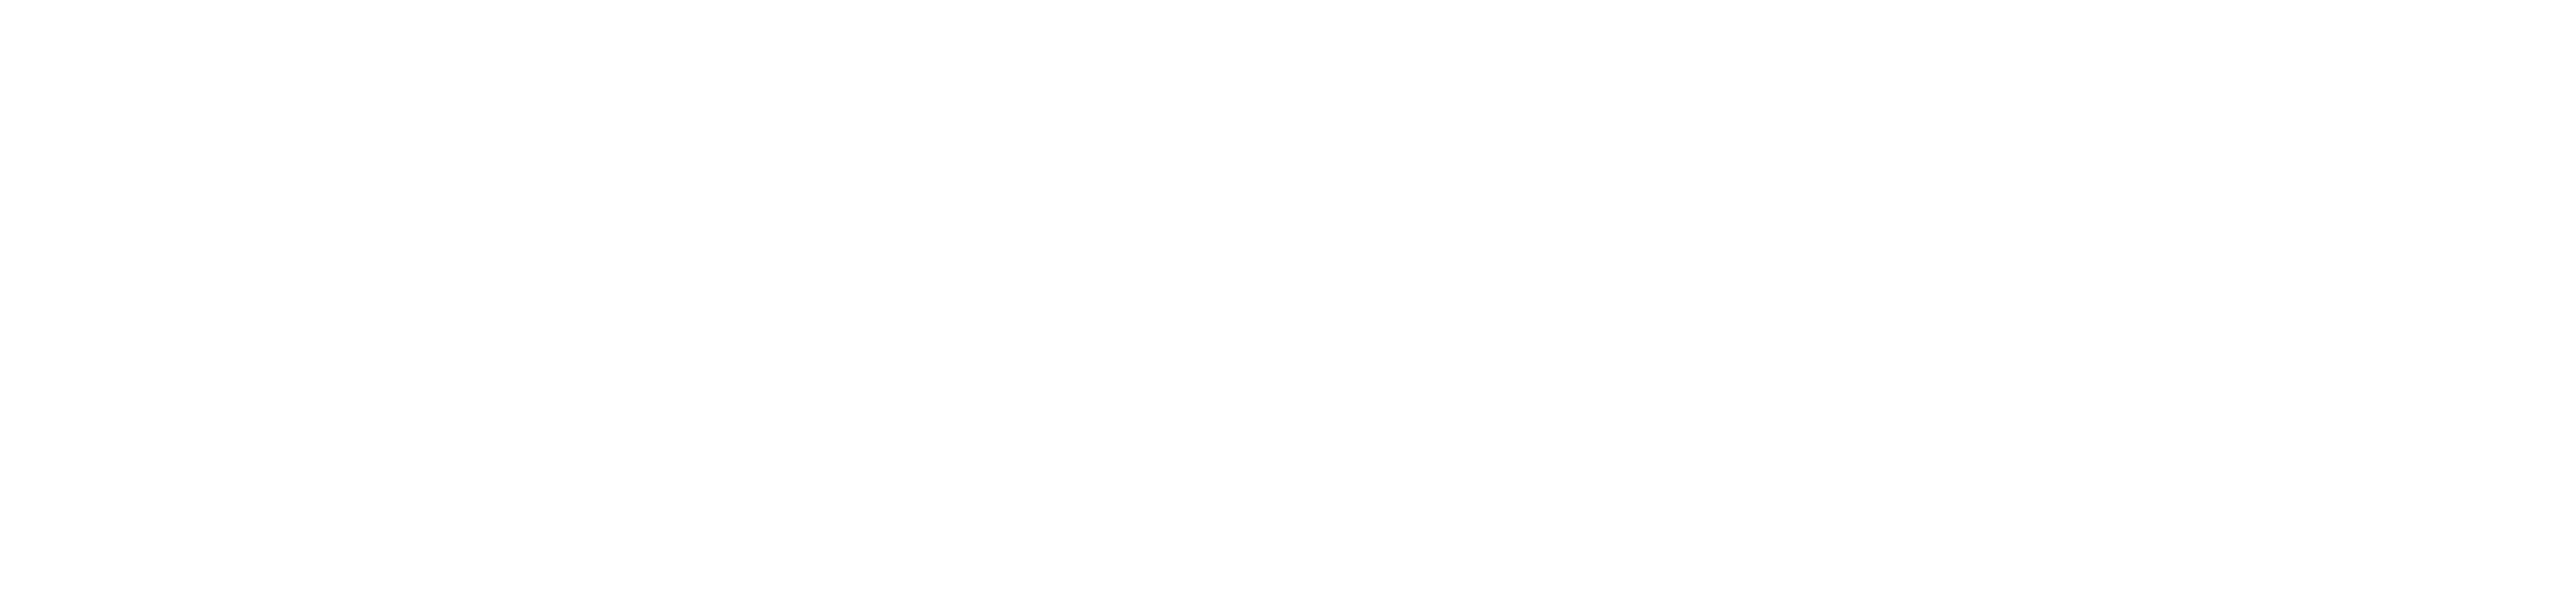 Homestead Rescue: Raney Ranch logo